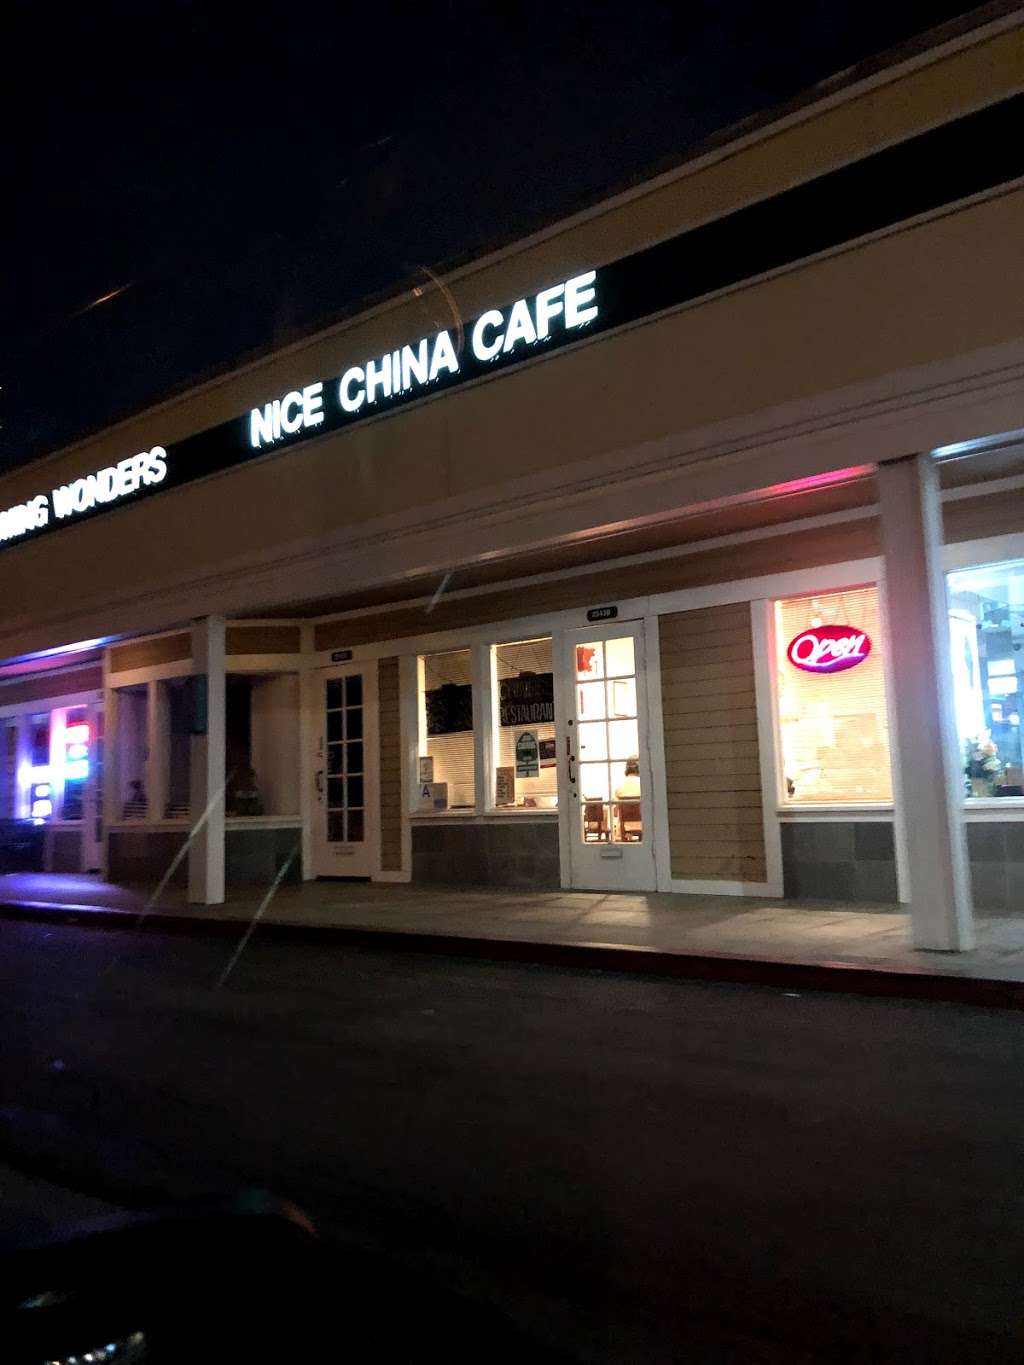 Nice China Cafe | 2543 Pacific Coast Hwy # B, Torrance, CA 90505, USA | Phone: (310) 539-0323